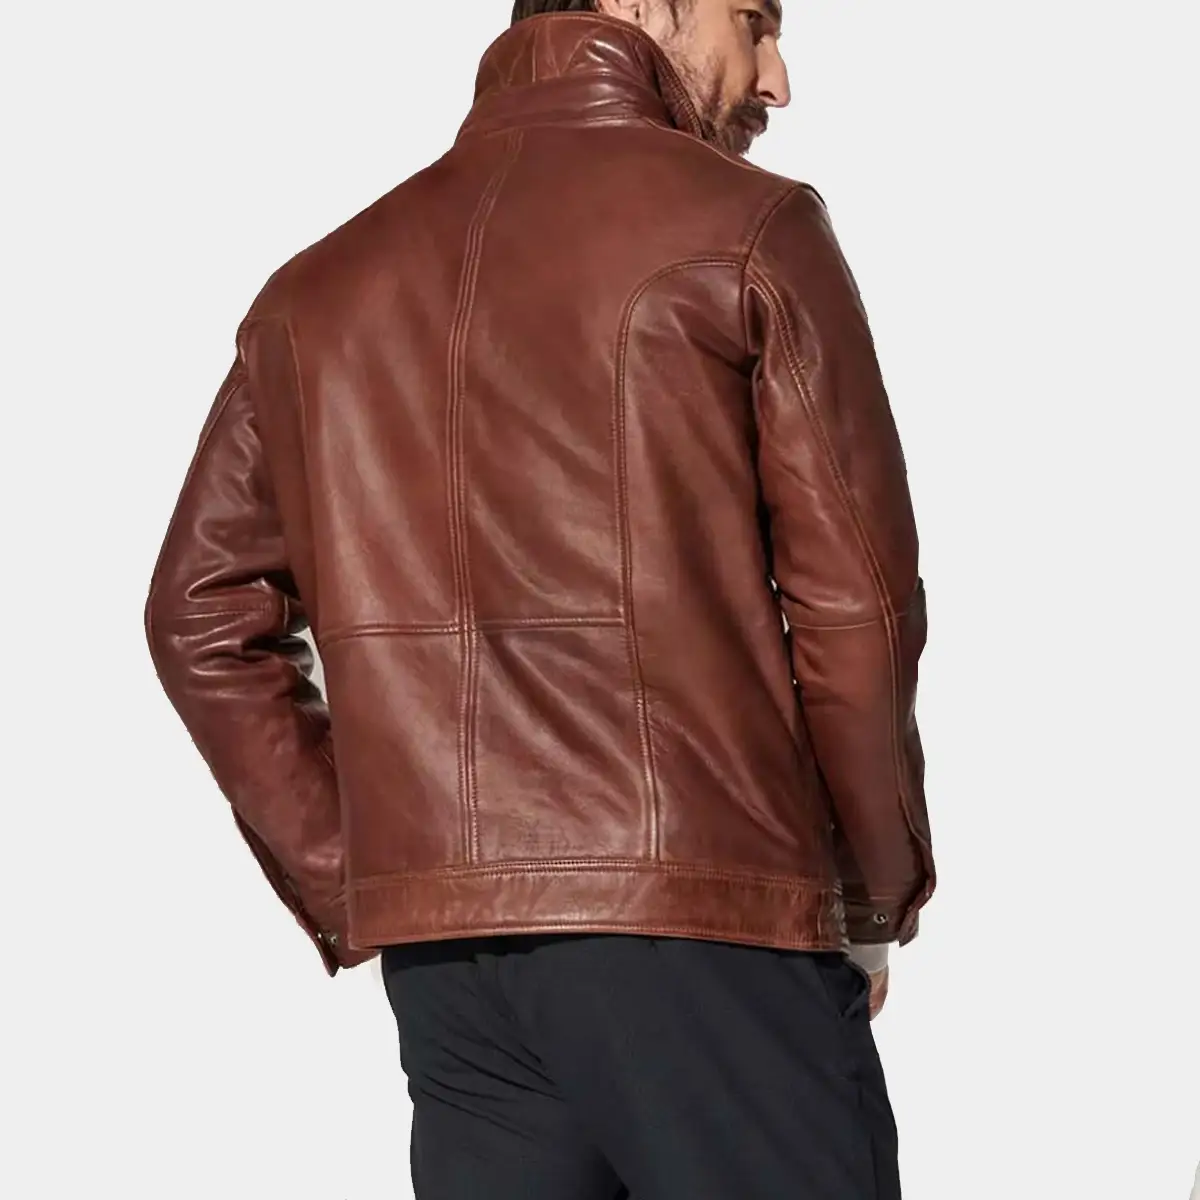 Mens leather jacket brown